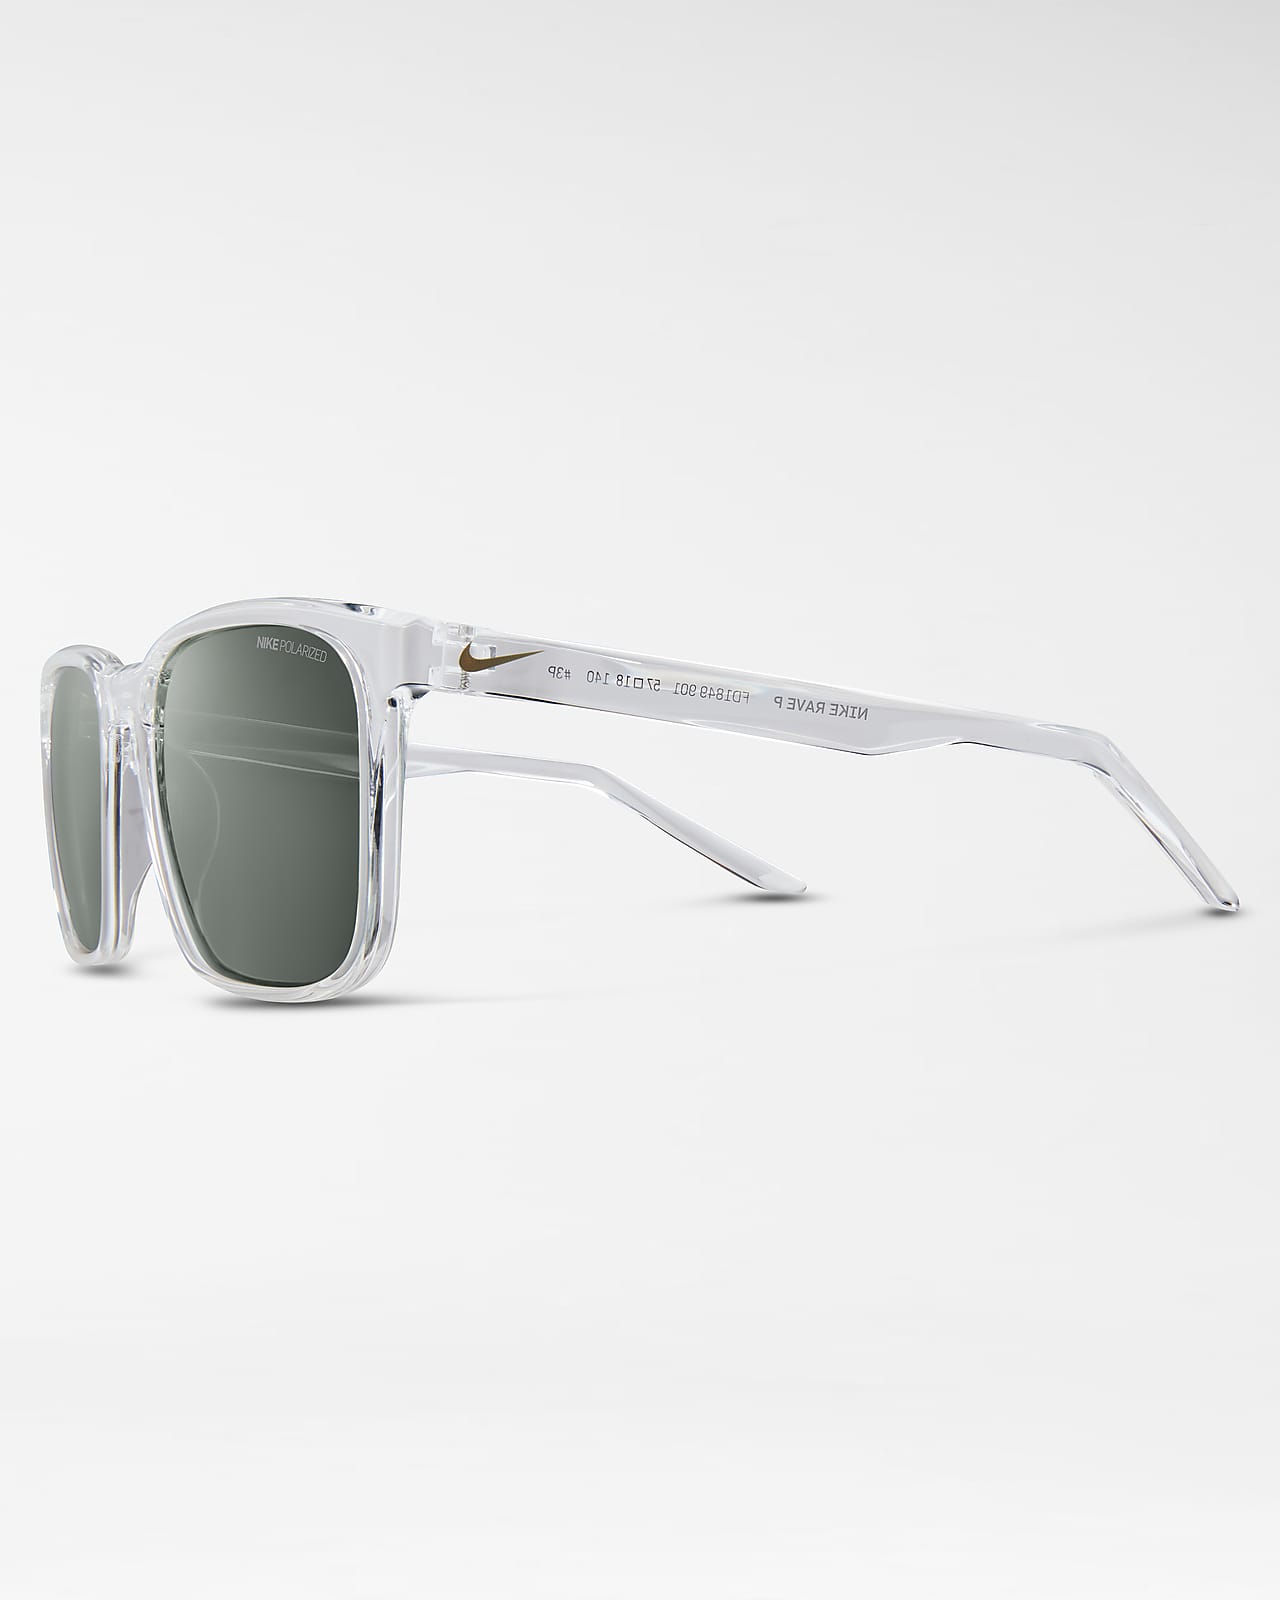 Gafas de sol con obturador con luz LED de Glowseen - Reactivas al sonido - Gafas  Rave recargables por USB - Blanco